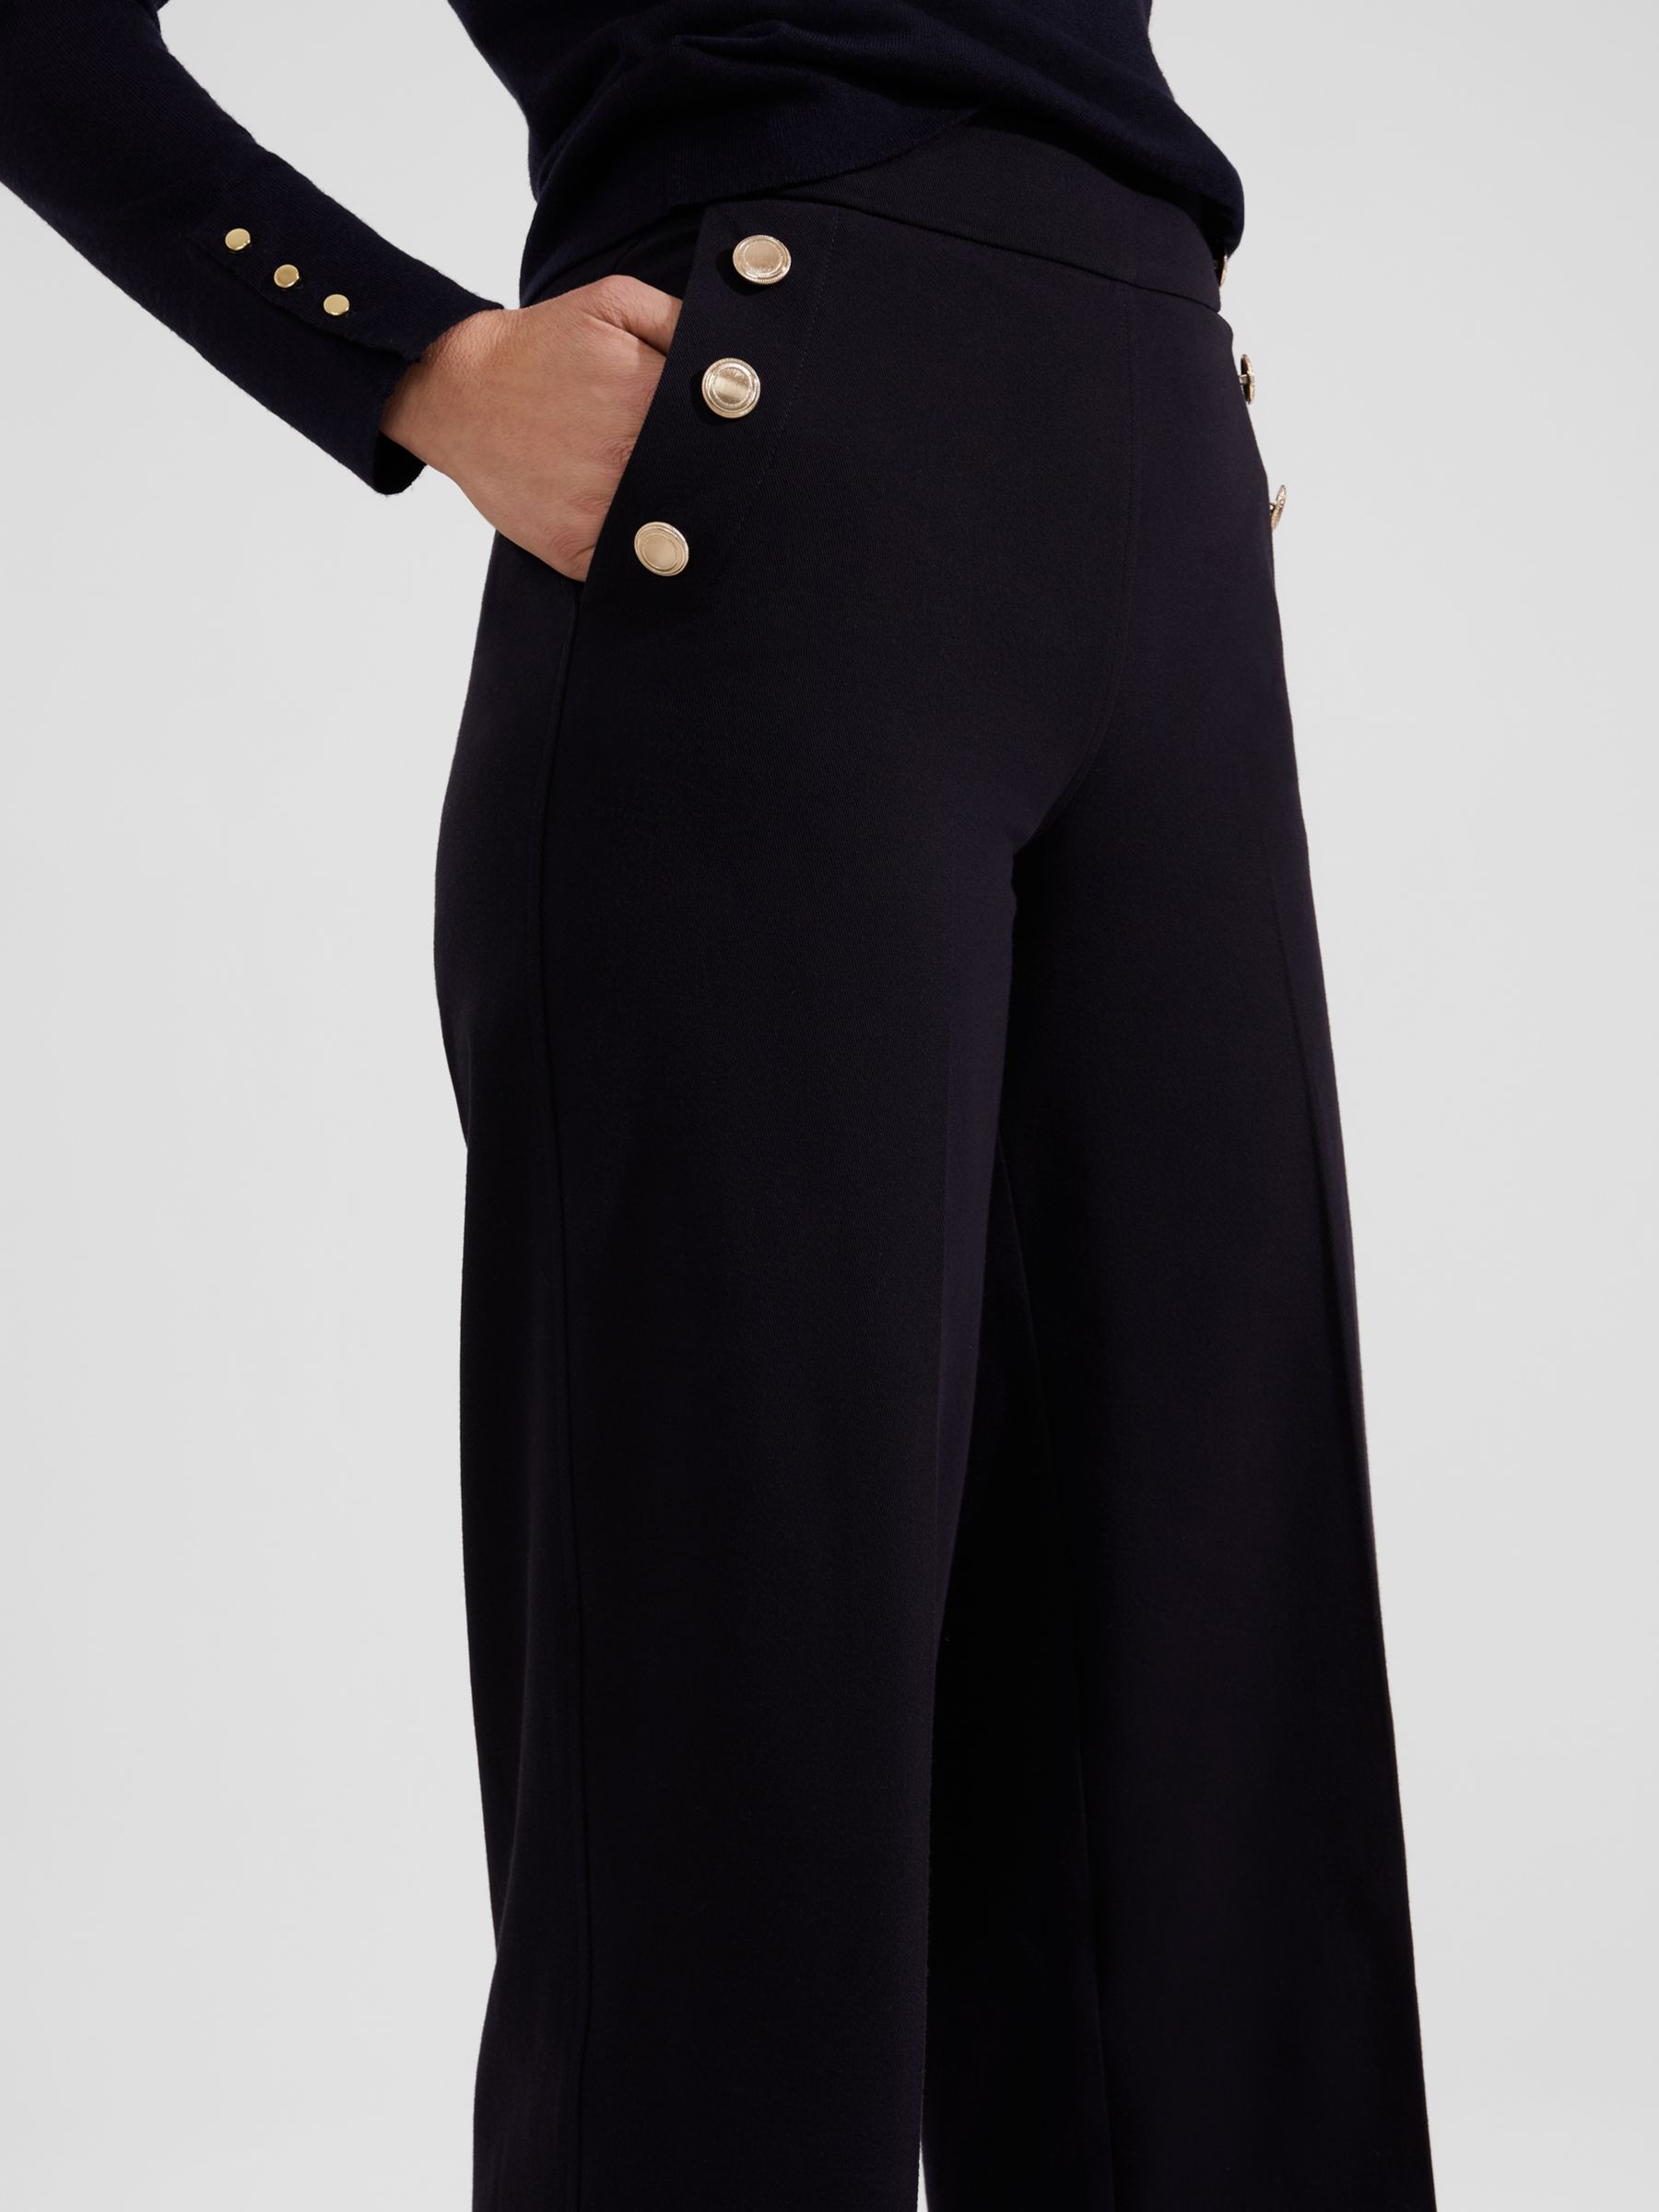 Hobbs Petite Hana Cotton Blend Trousers, Navy, 12